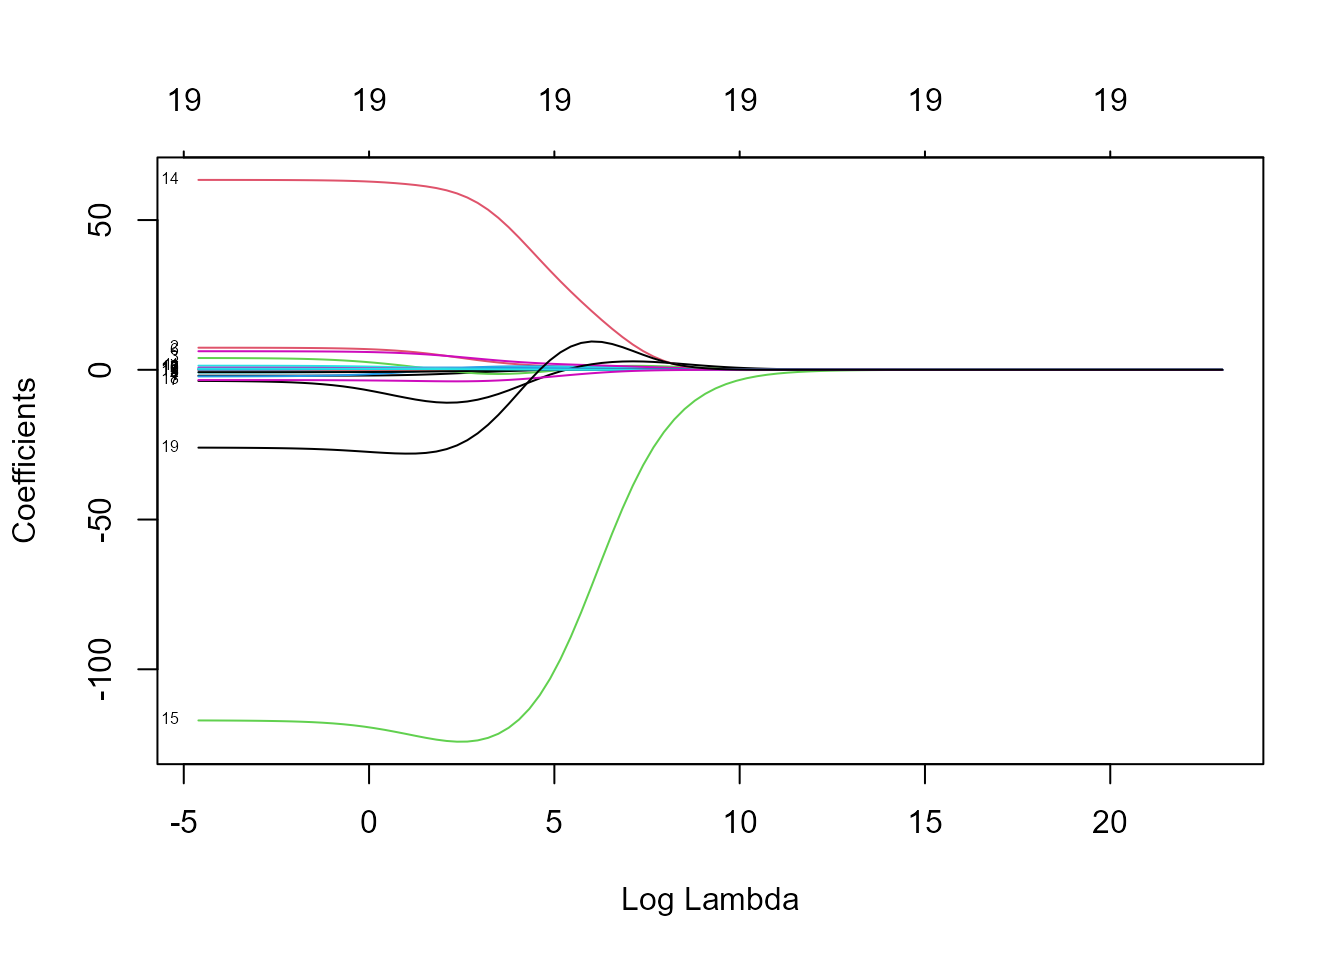 Coeficientes estimados para distintos valores del parámetro de penalización (en la escala logarítmica).